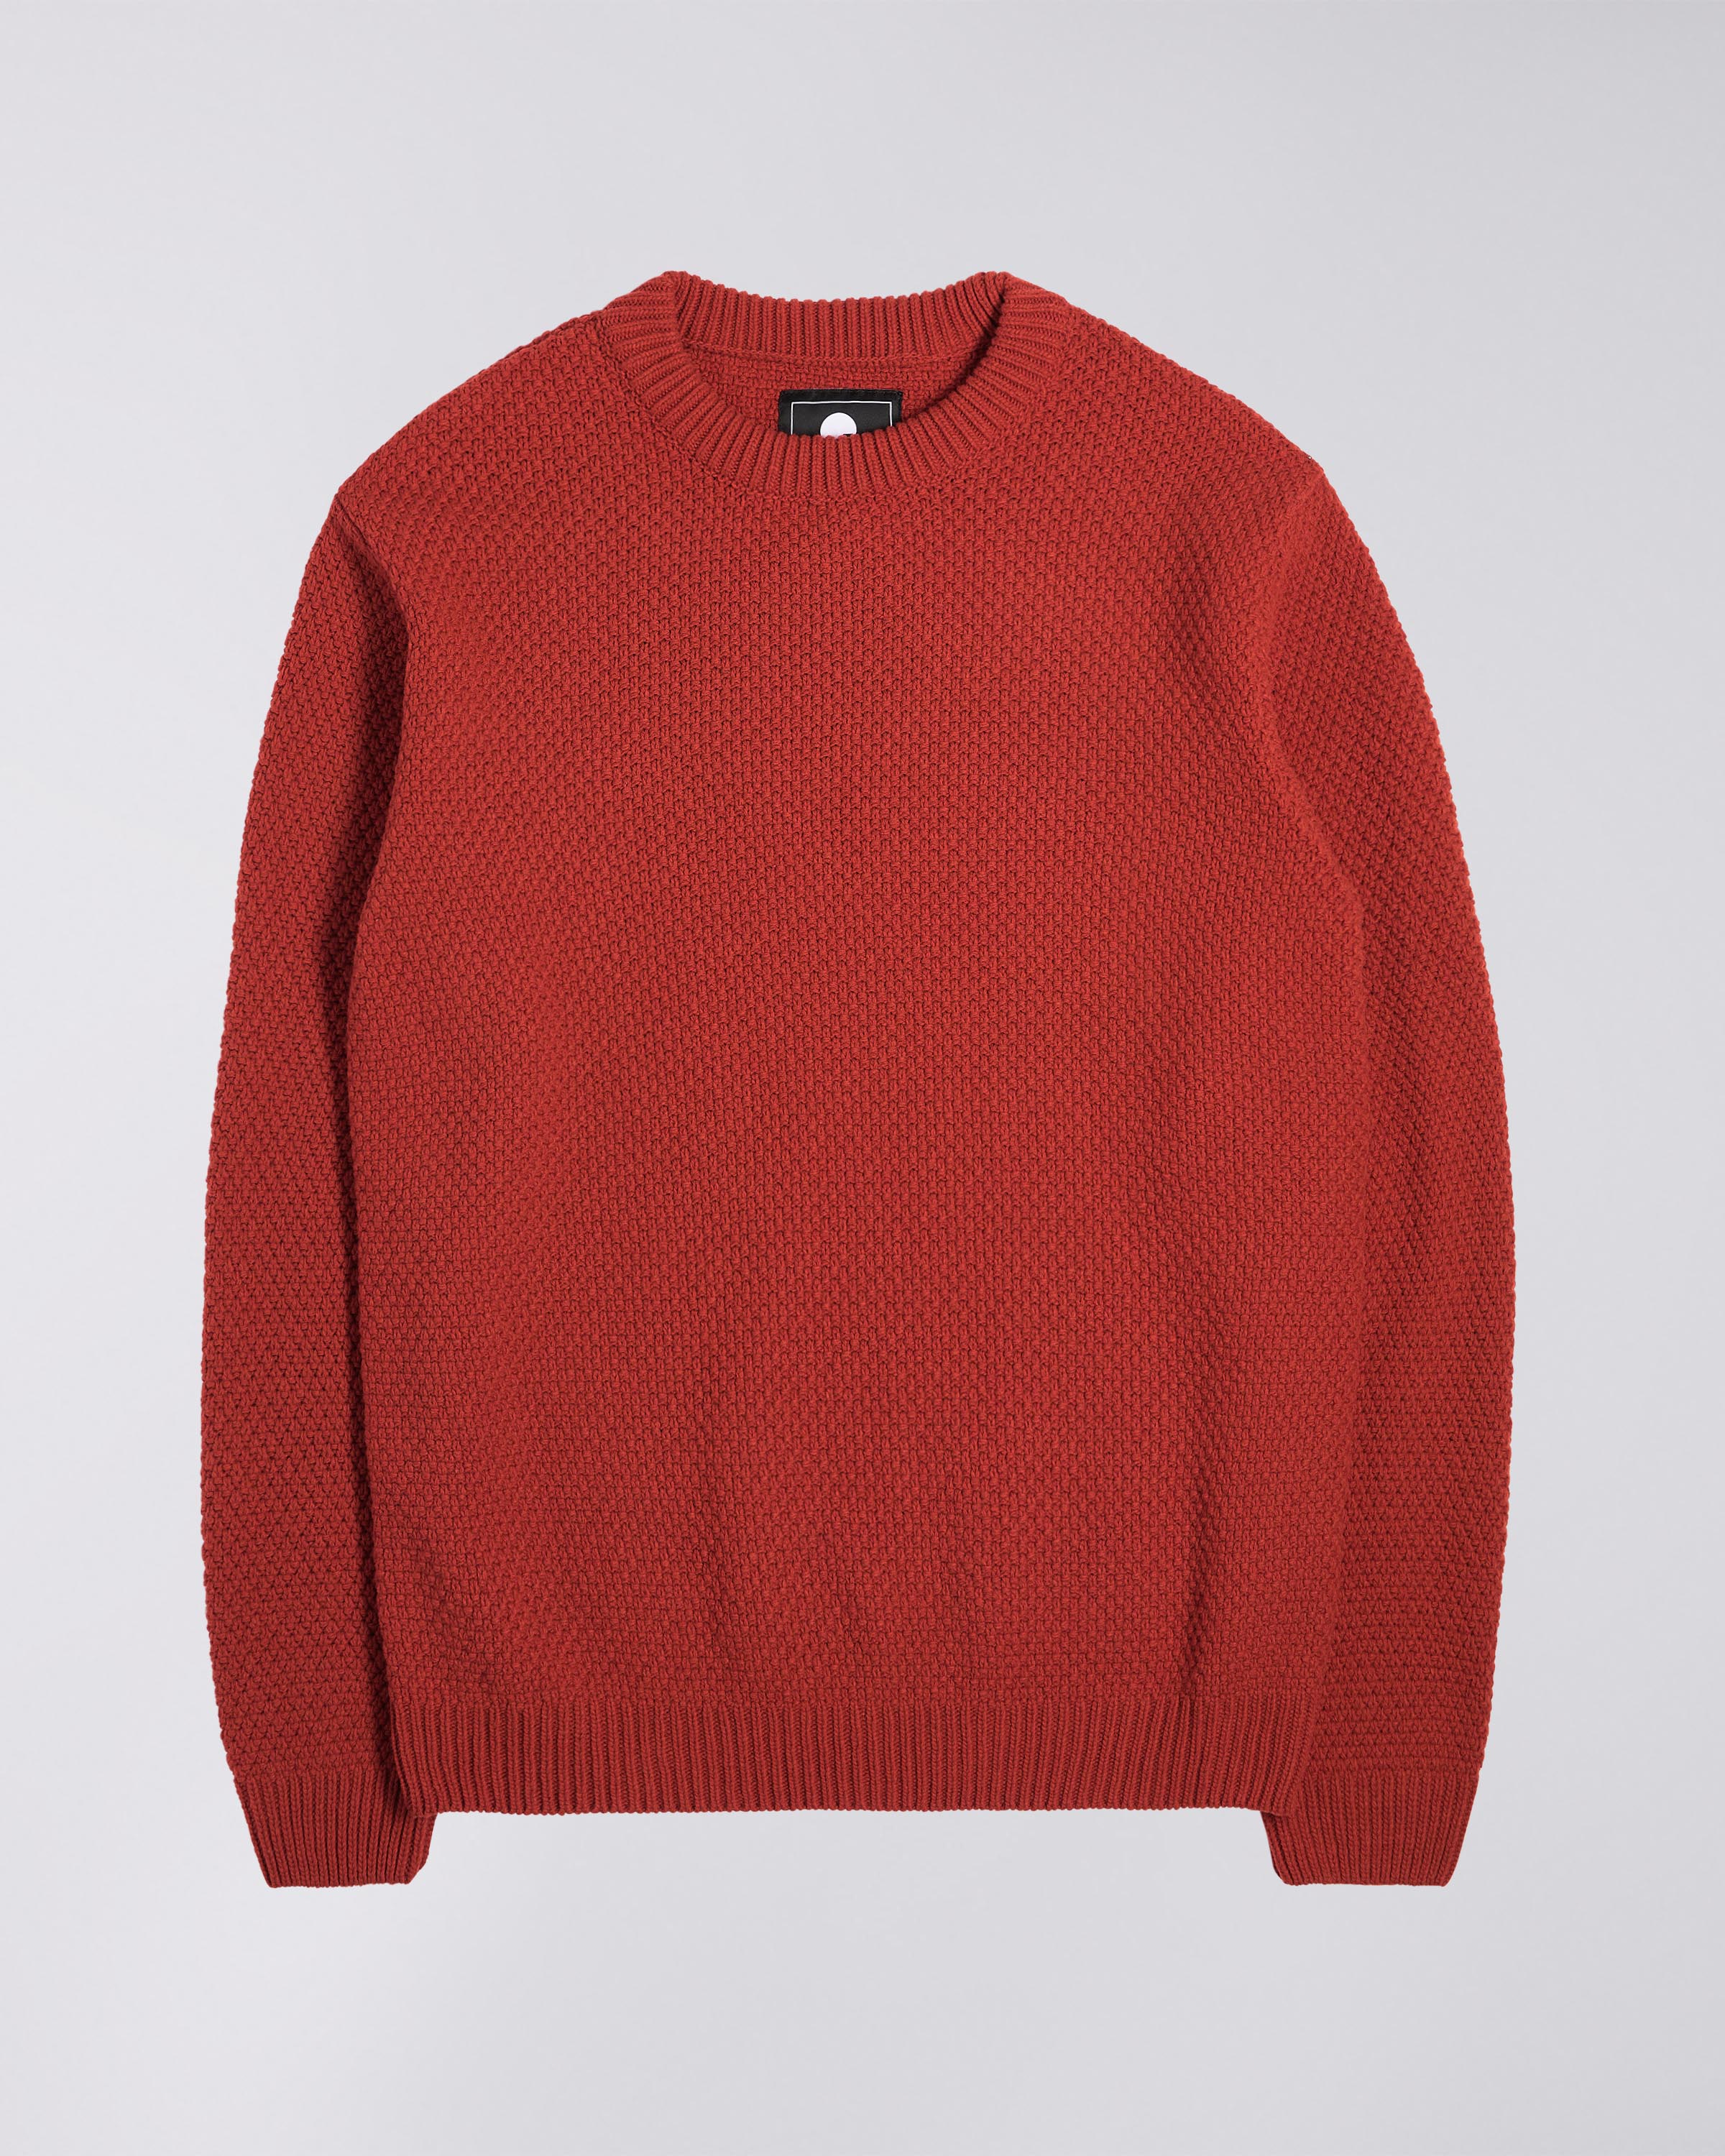 Goodwin Sweater